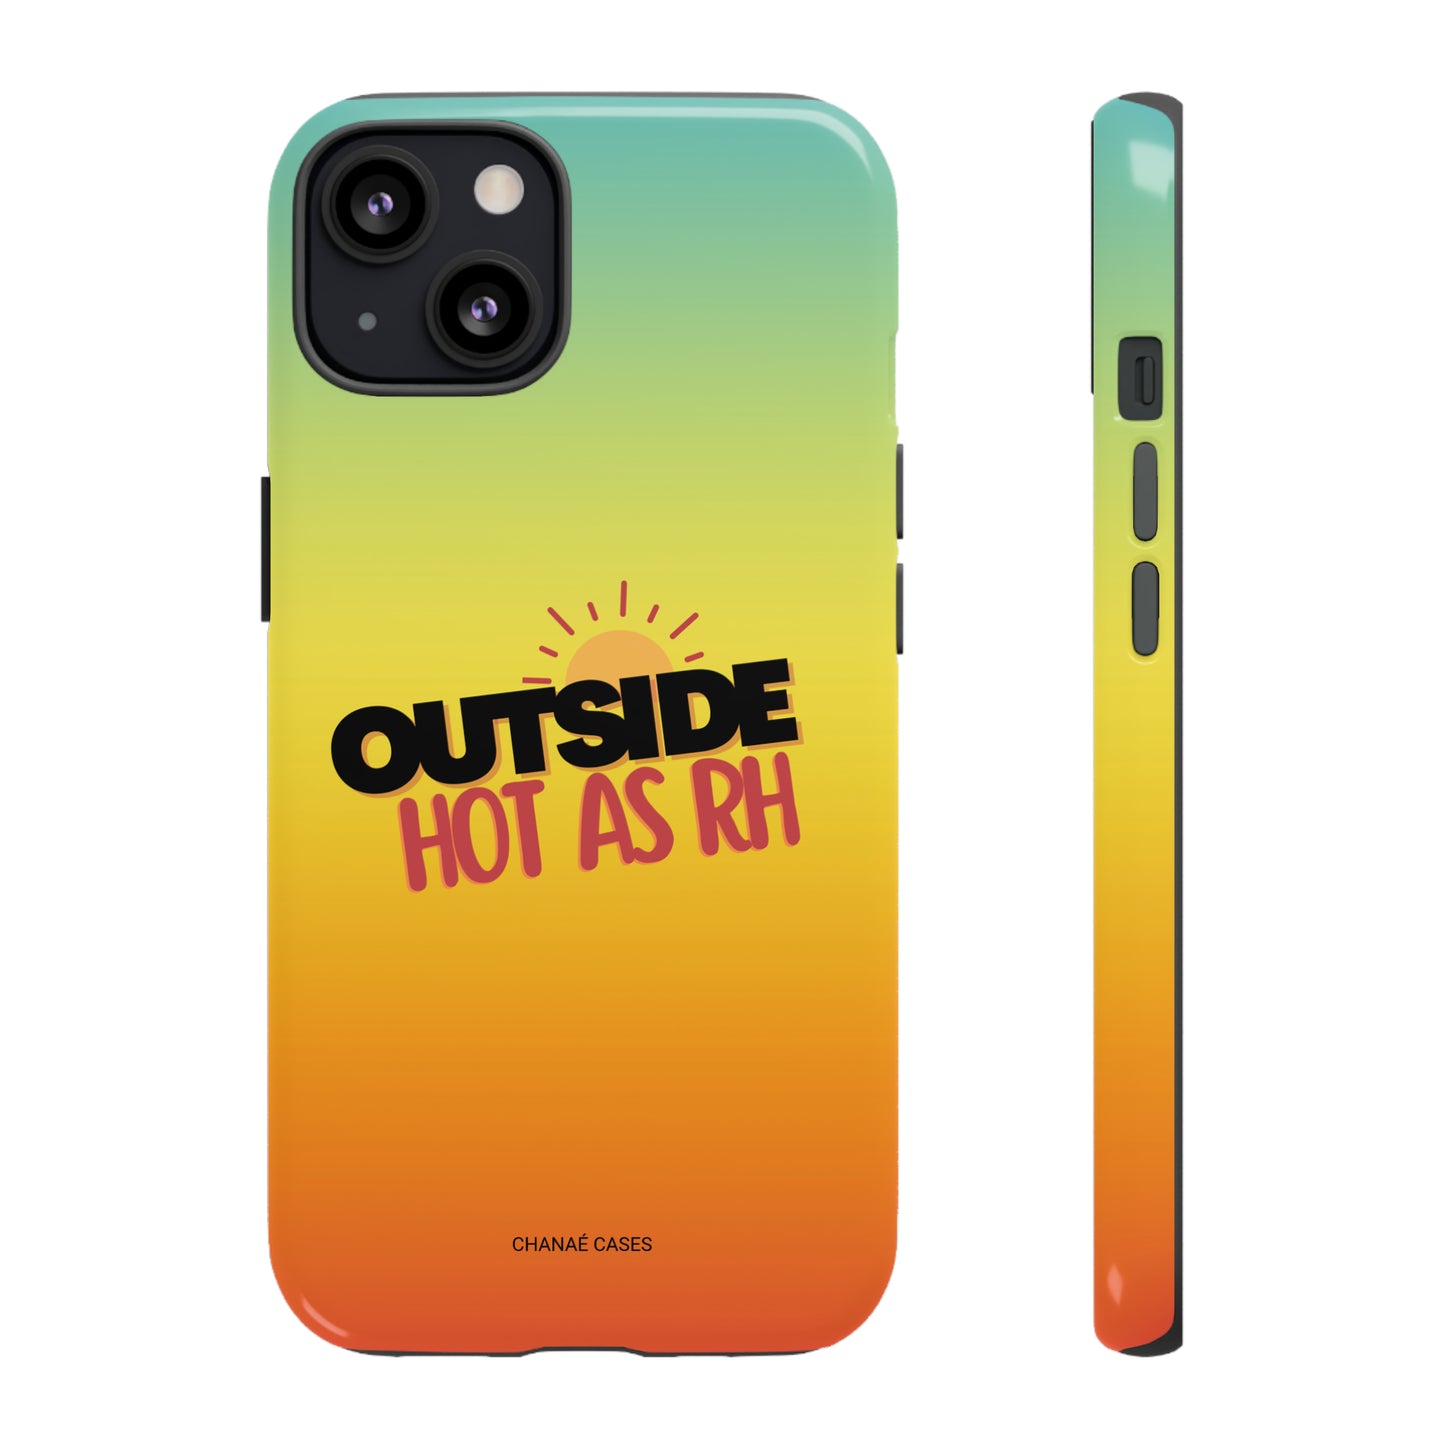 Outside Hot (AS RH) iPhone "Tough" Case (Multi)